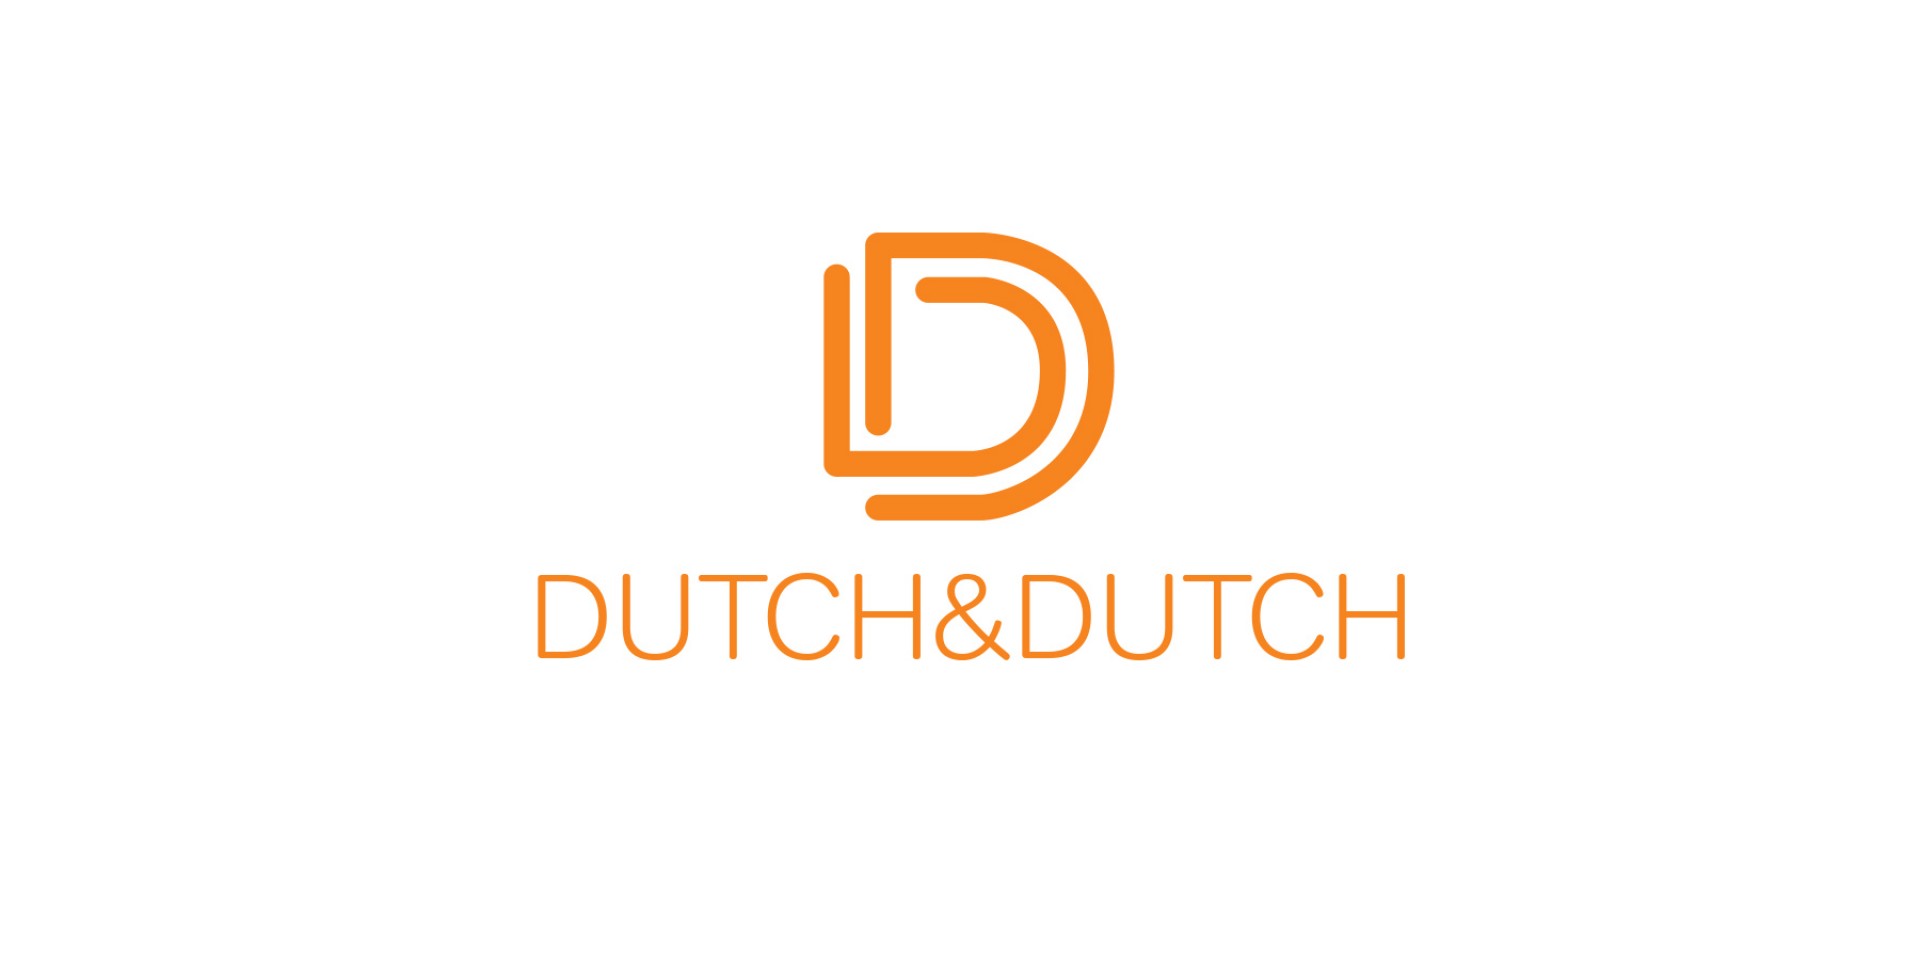 Dutch&Dutch Branding, Stationary Design